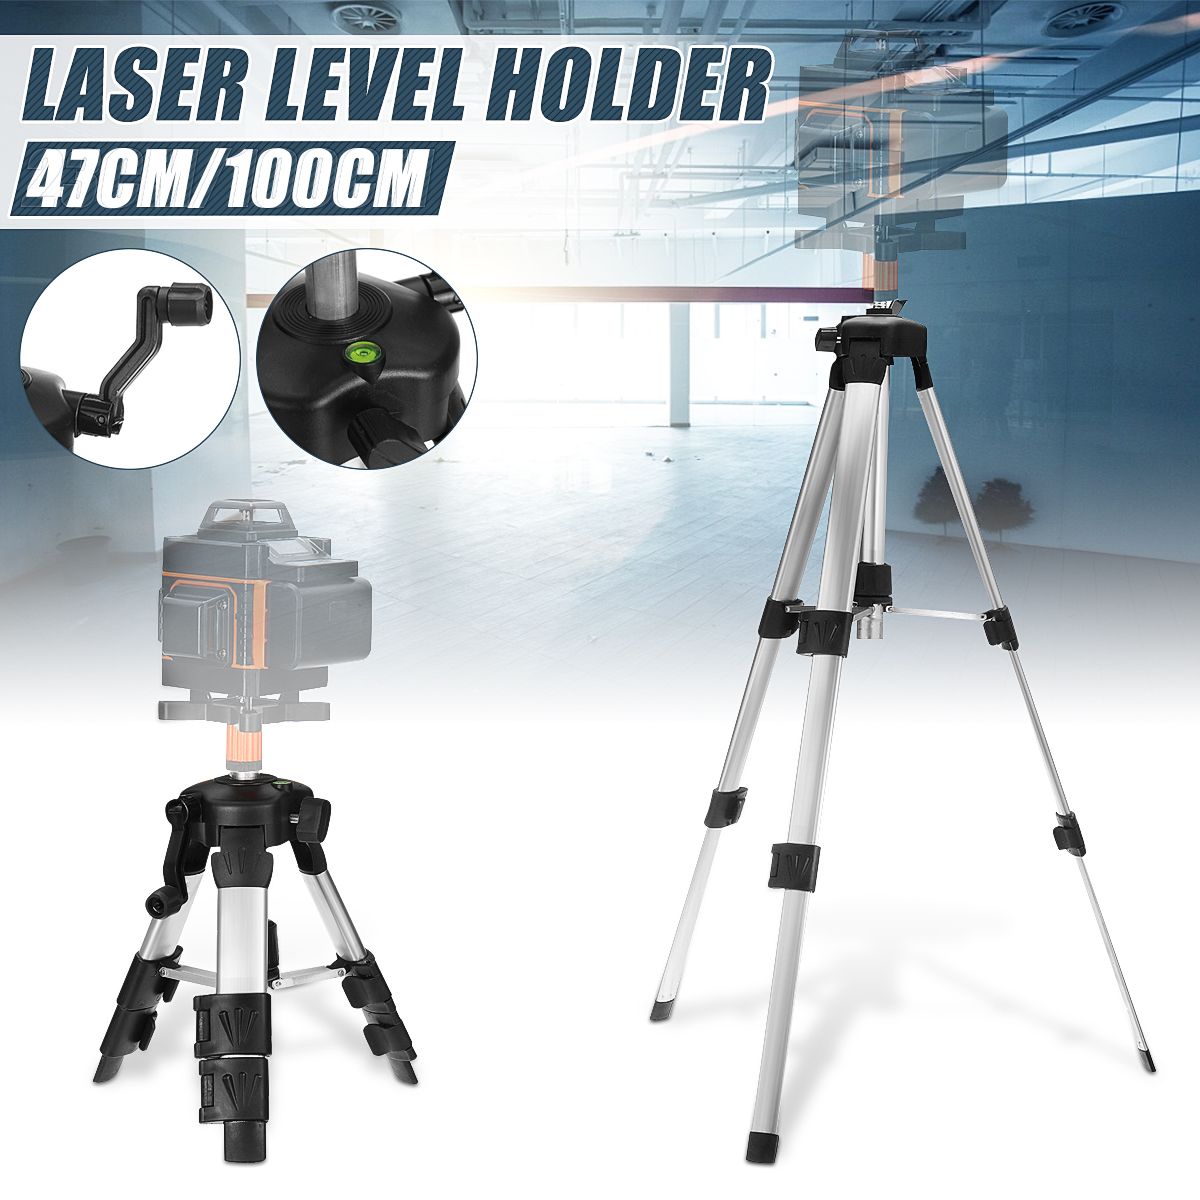 47100CM-Folding-Adjustable-Aluminium-Alloy-Tripod-Base-Holder-For-Laser-Level-Electric-Laser-Measure-1652755